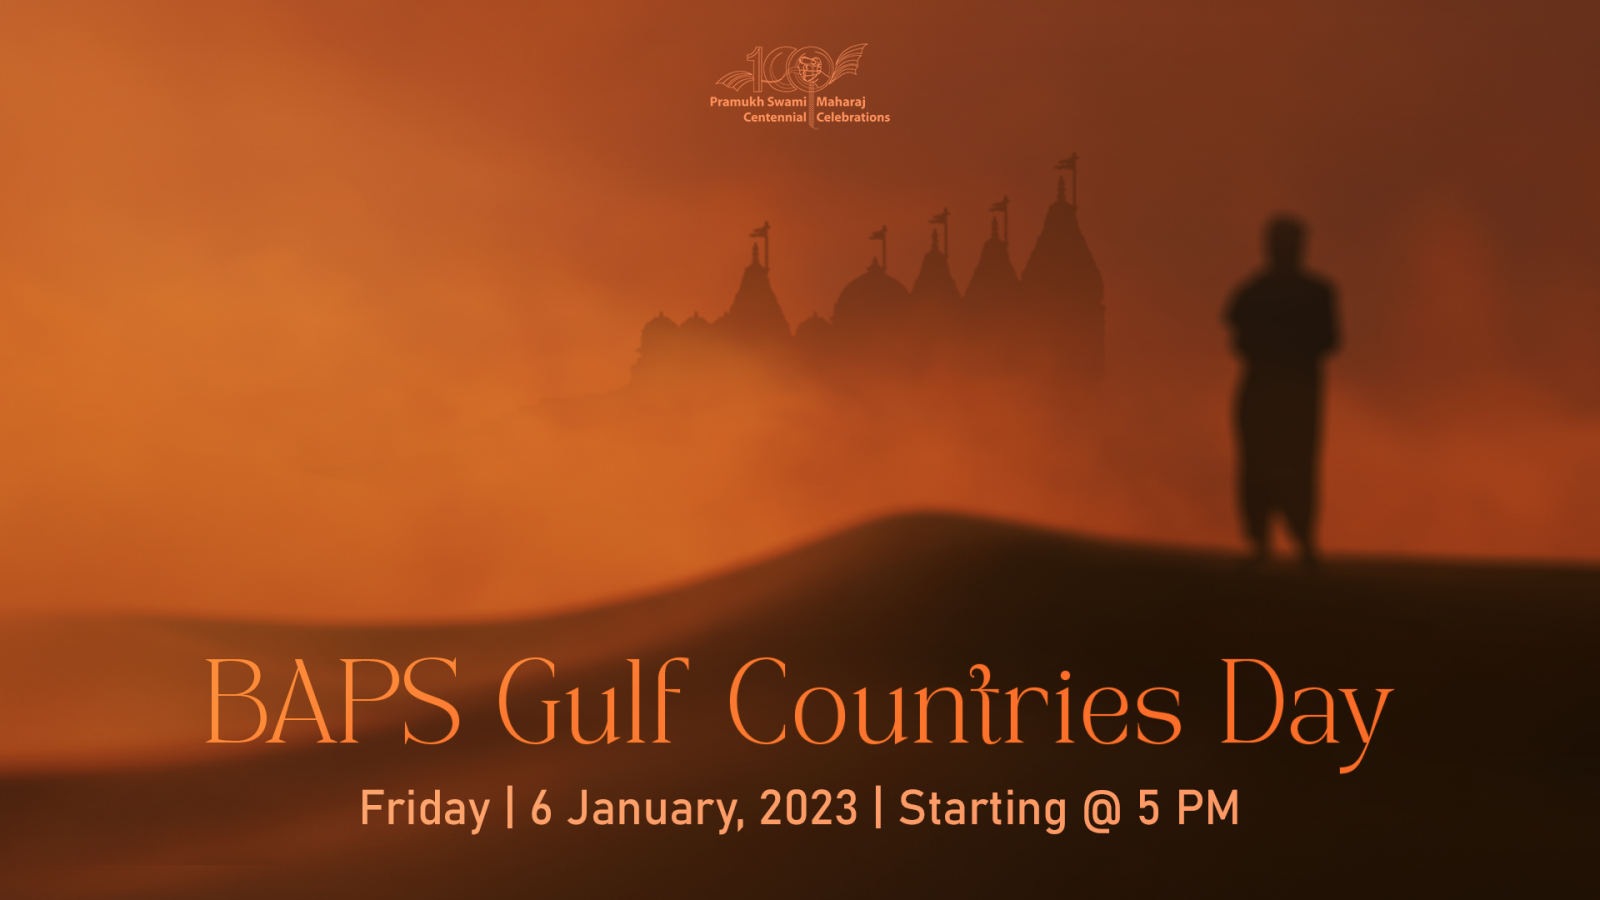 BAPS Gulf Countries Day